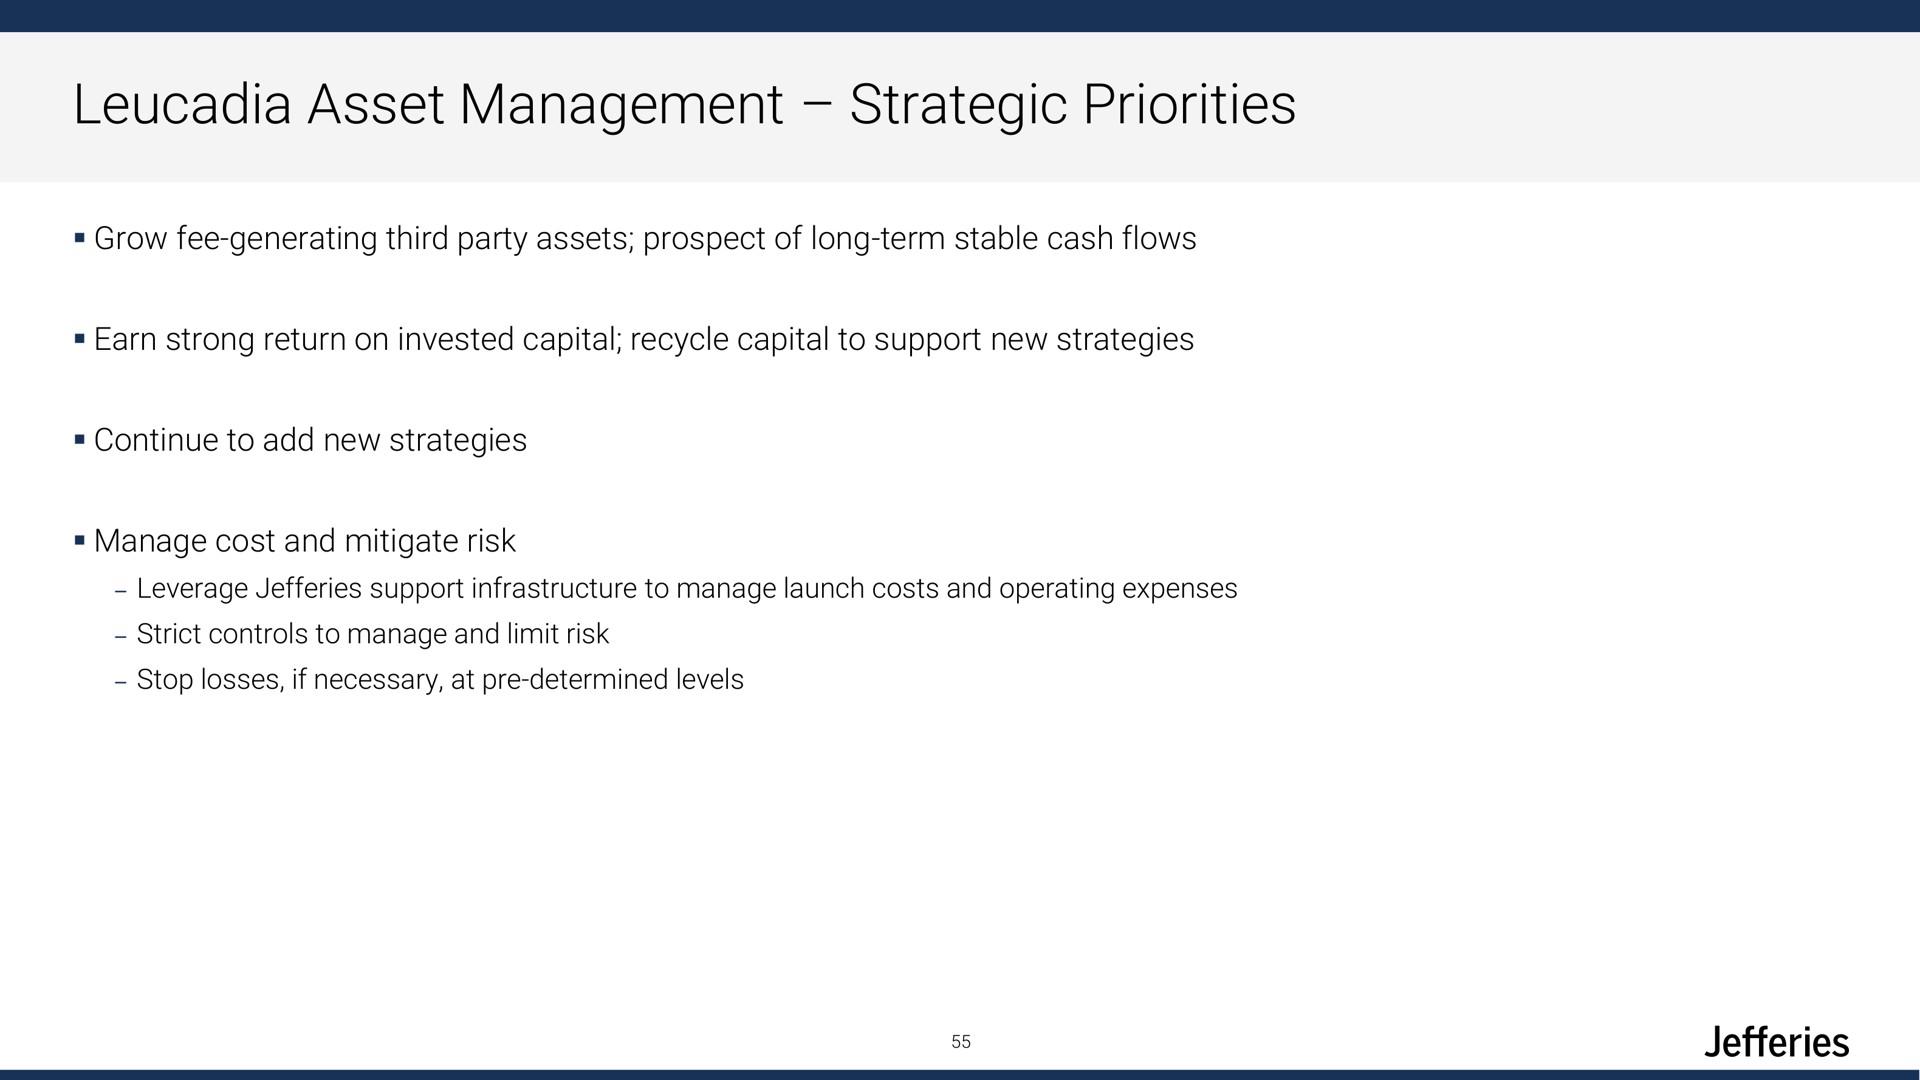 asset management strategic priorities | Jefferies Financial Group